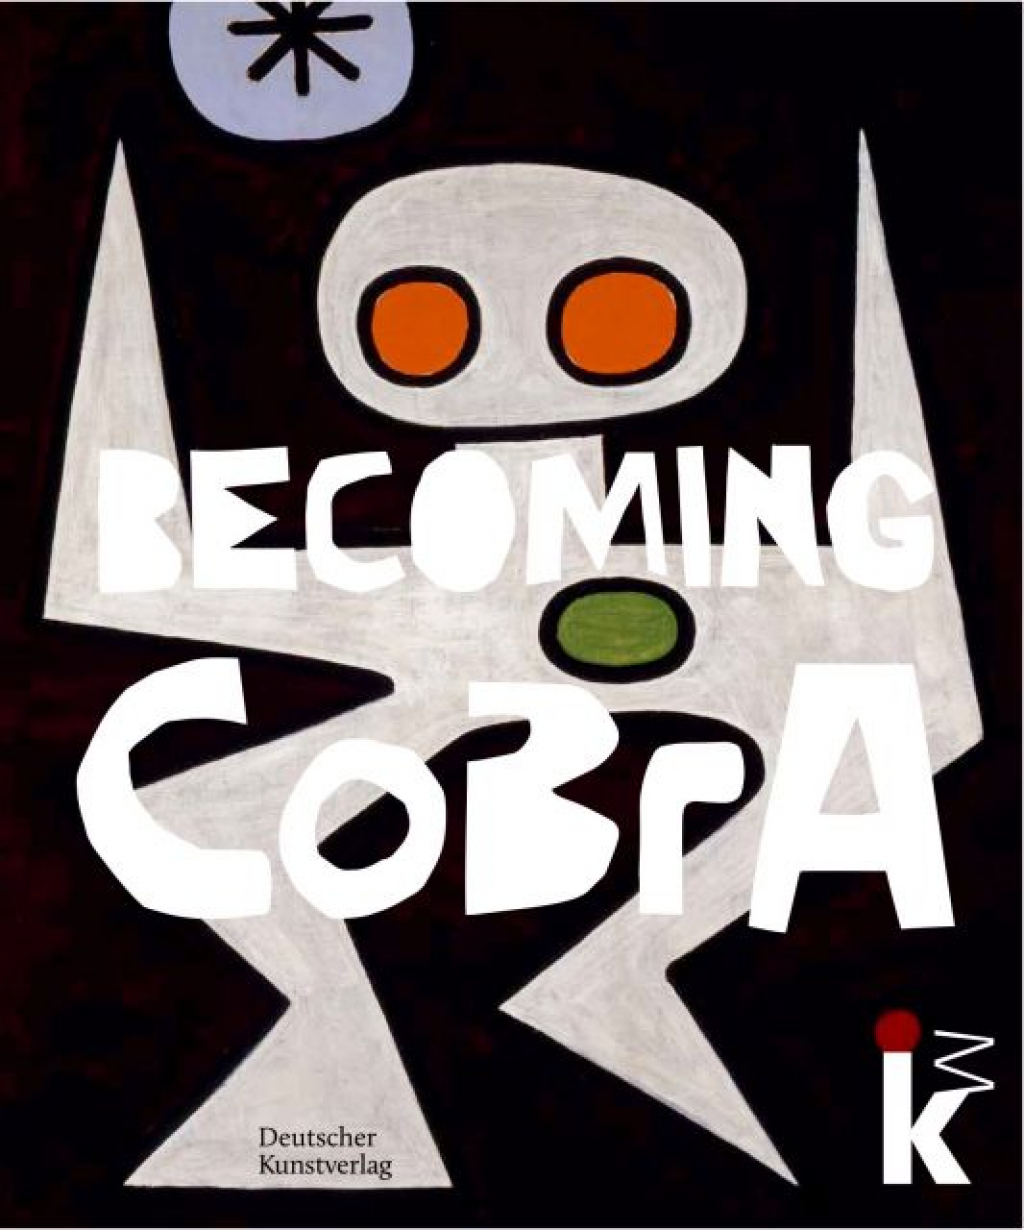 Katalog Becoming CoBrA